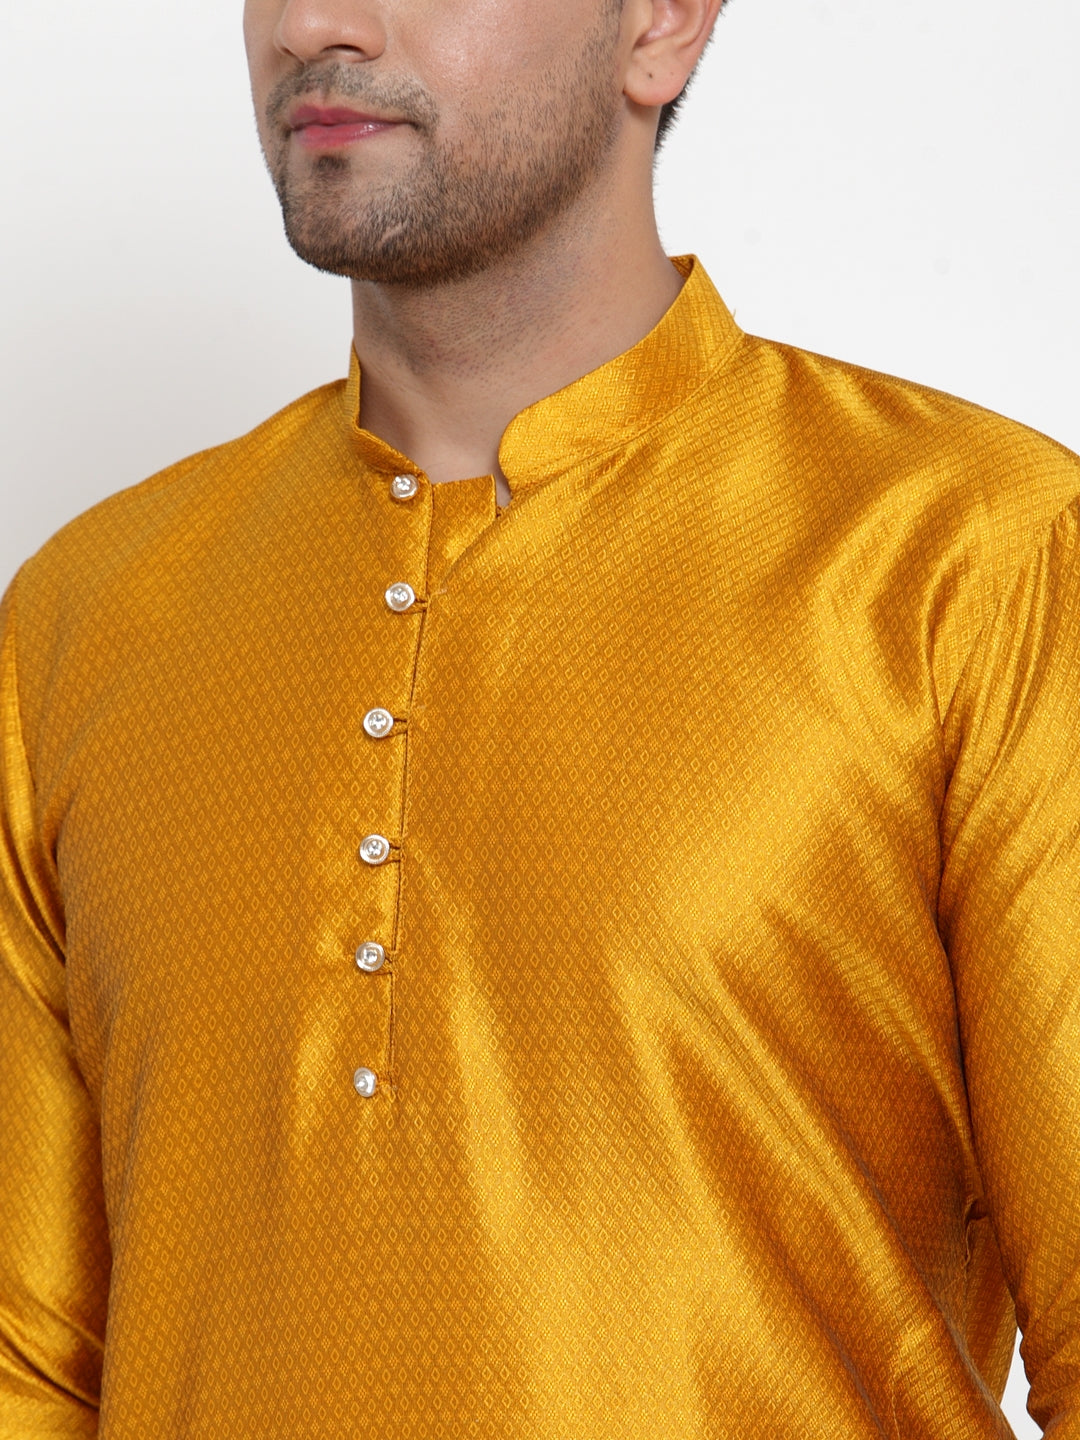 Jompers Men's Yellow Jacquard Kurta Payjama Sets